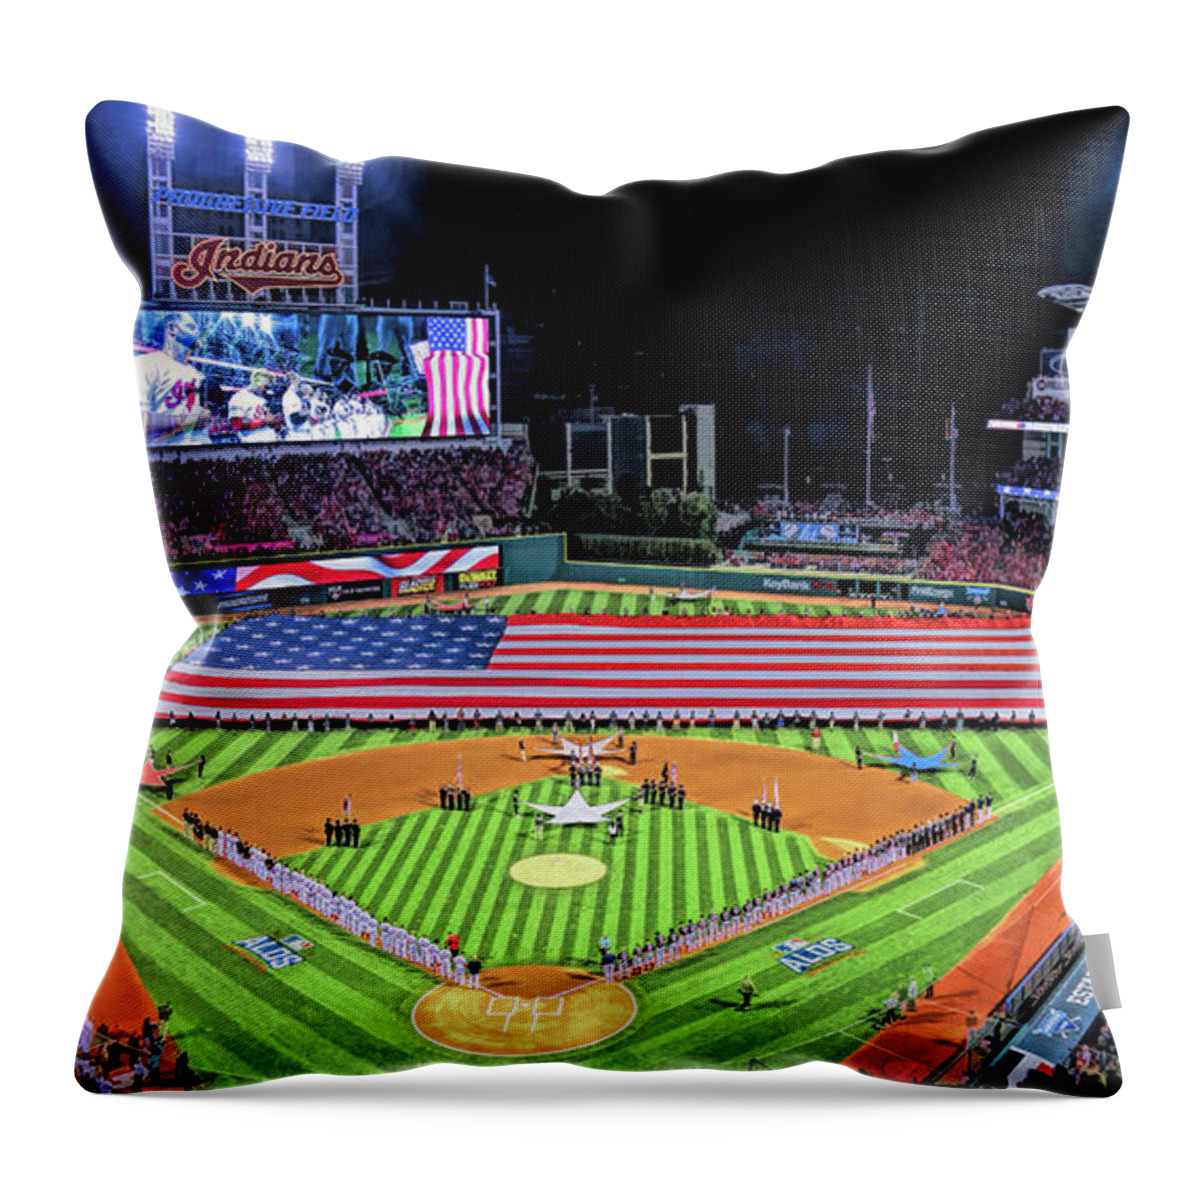 Progressive Field Throw Pillow featuring the painting Progressive Field Cleveland Indians Baseball Ballpark Stadium by Christopher Arndt